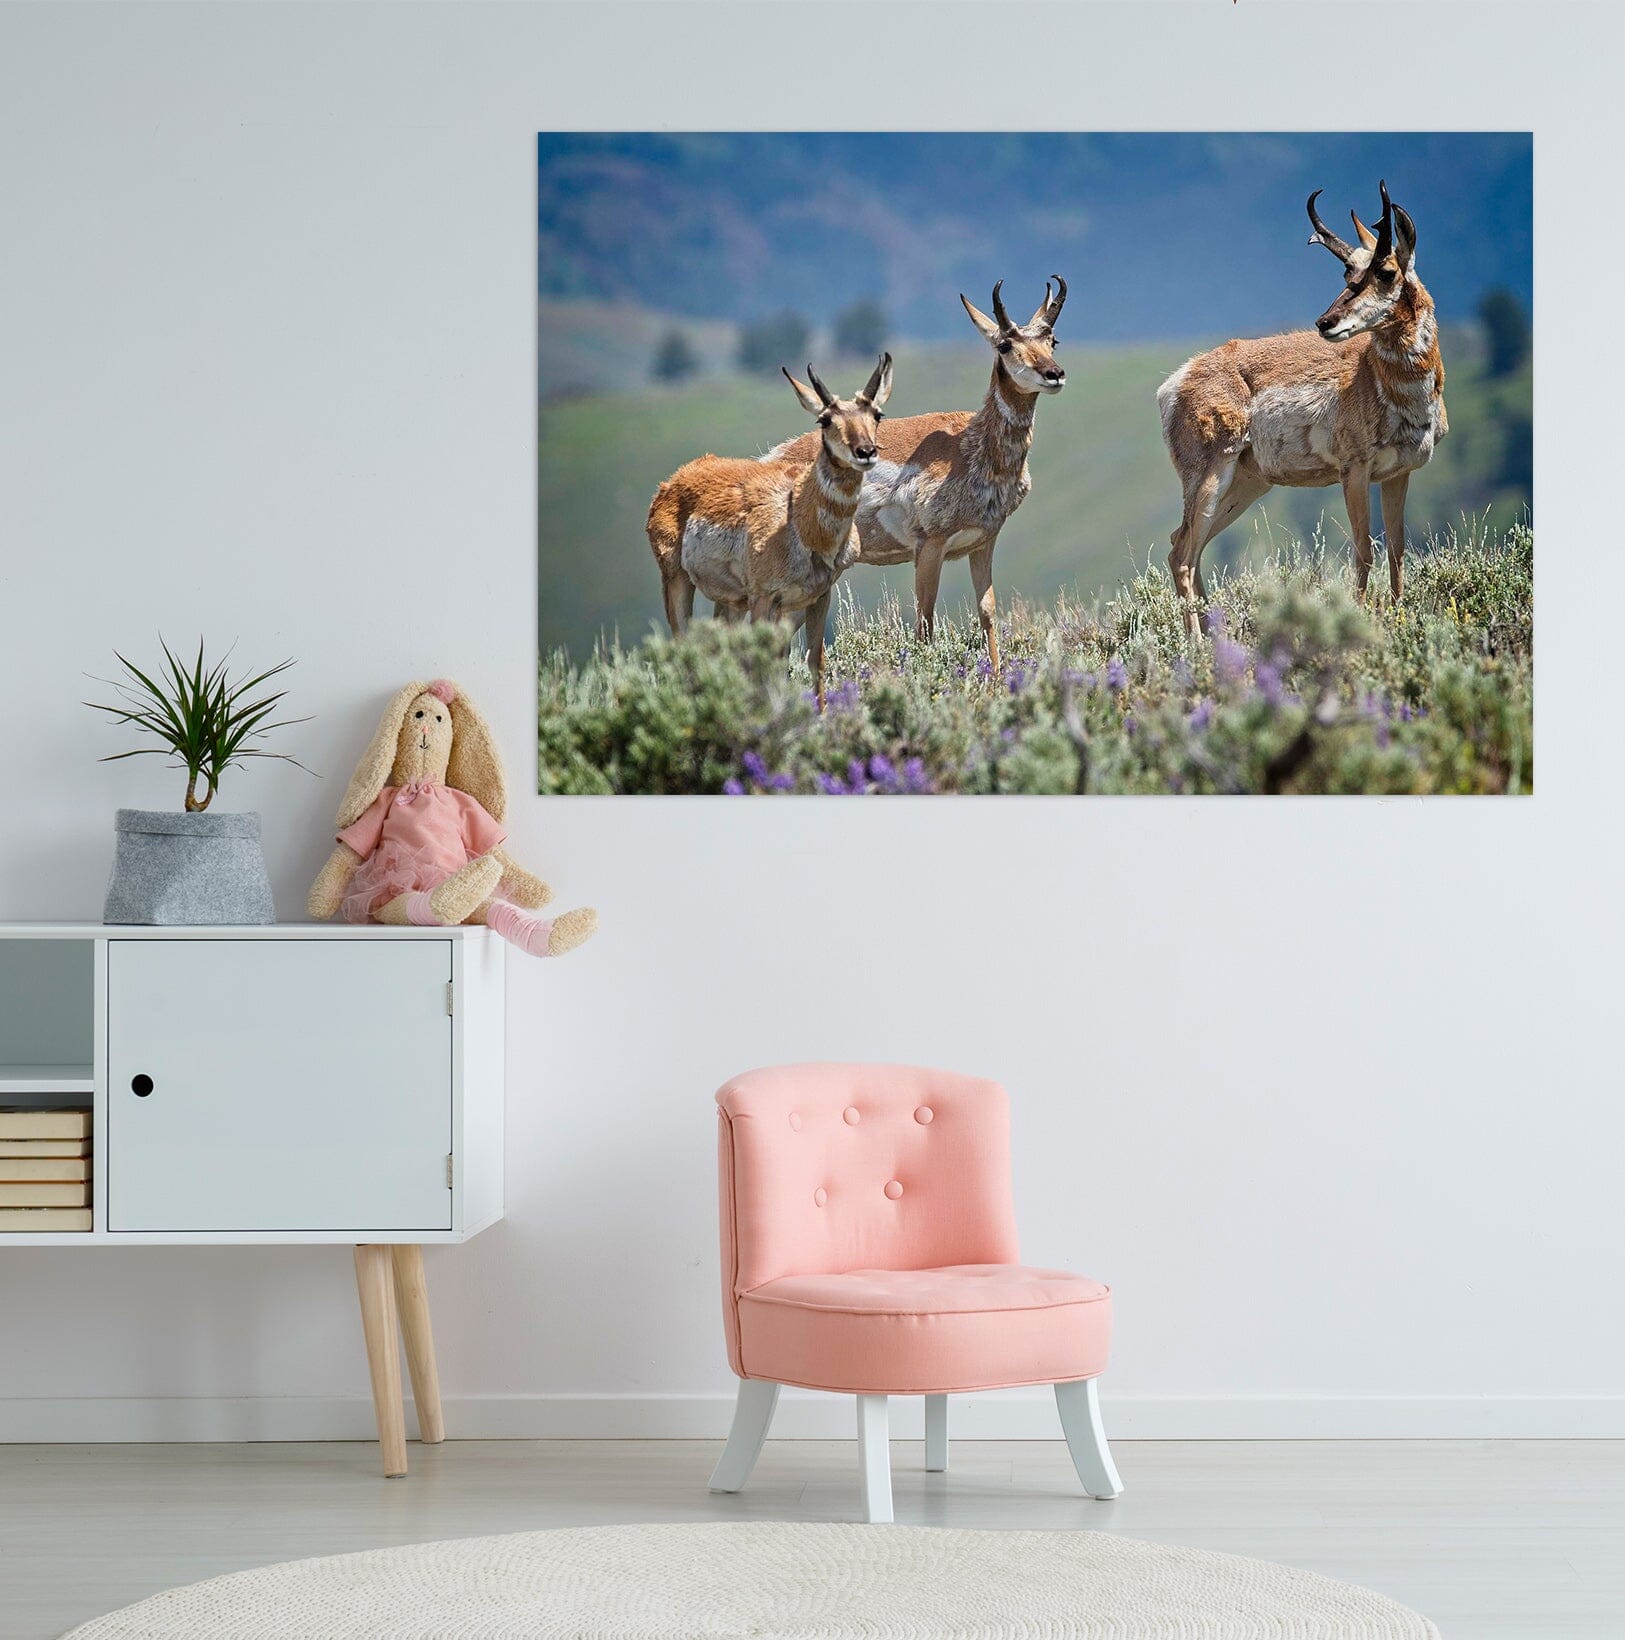 3D Pronghorn Antelope 002 Kathy Barefield Wall Sticker Wallpaper AJ Wallpaper 2 